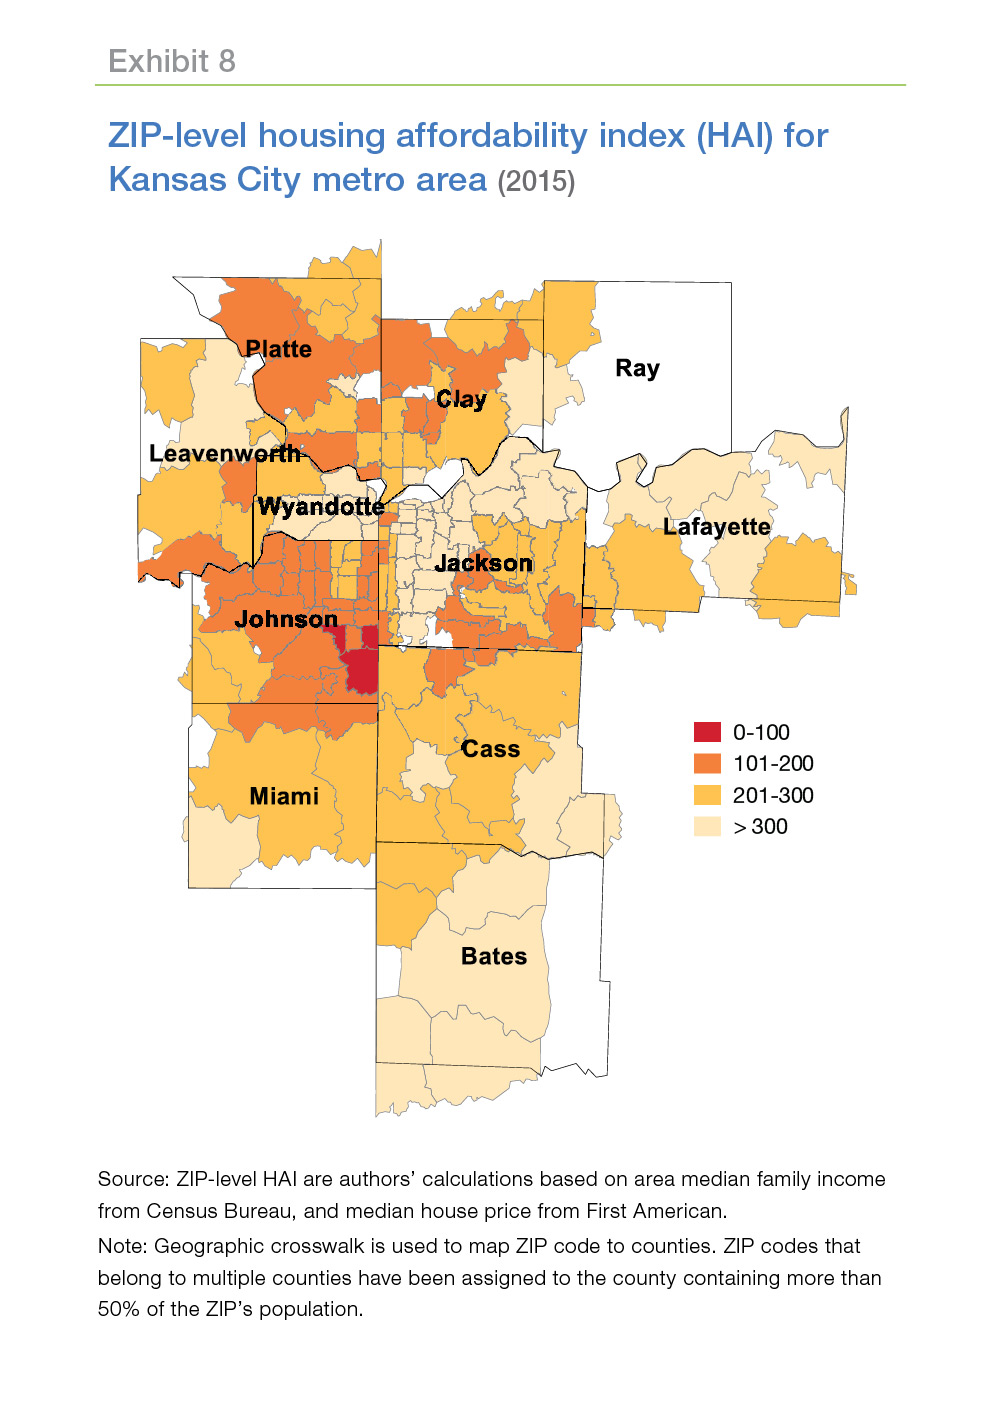 Map showing ZIP-level housing affordability index (HAI) for Kansas City Metro area (2015)